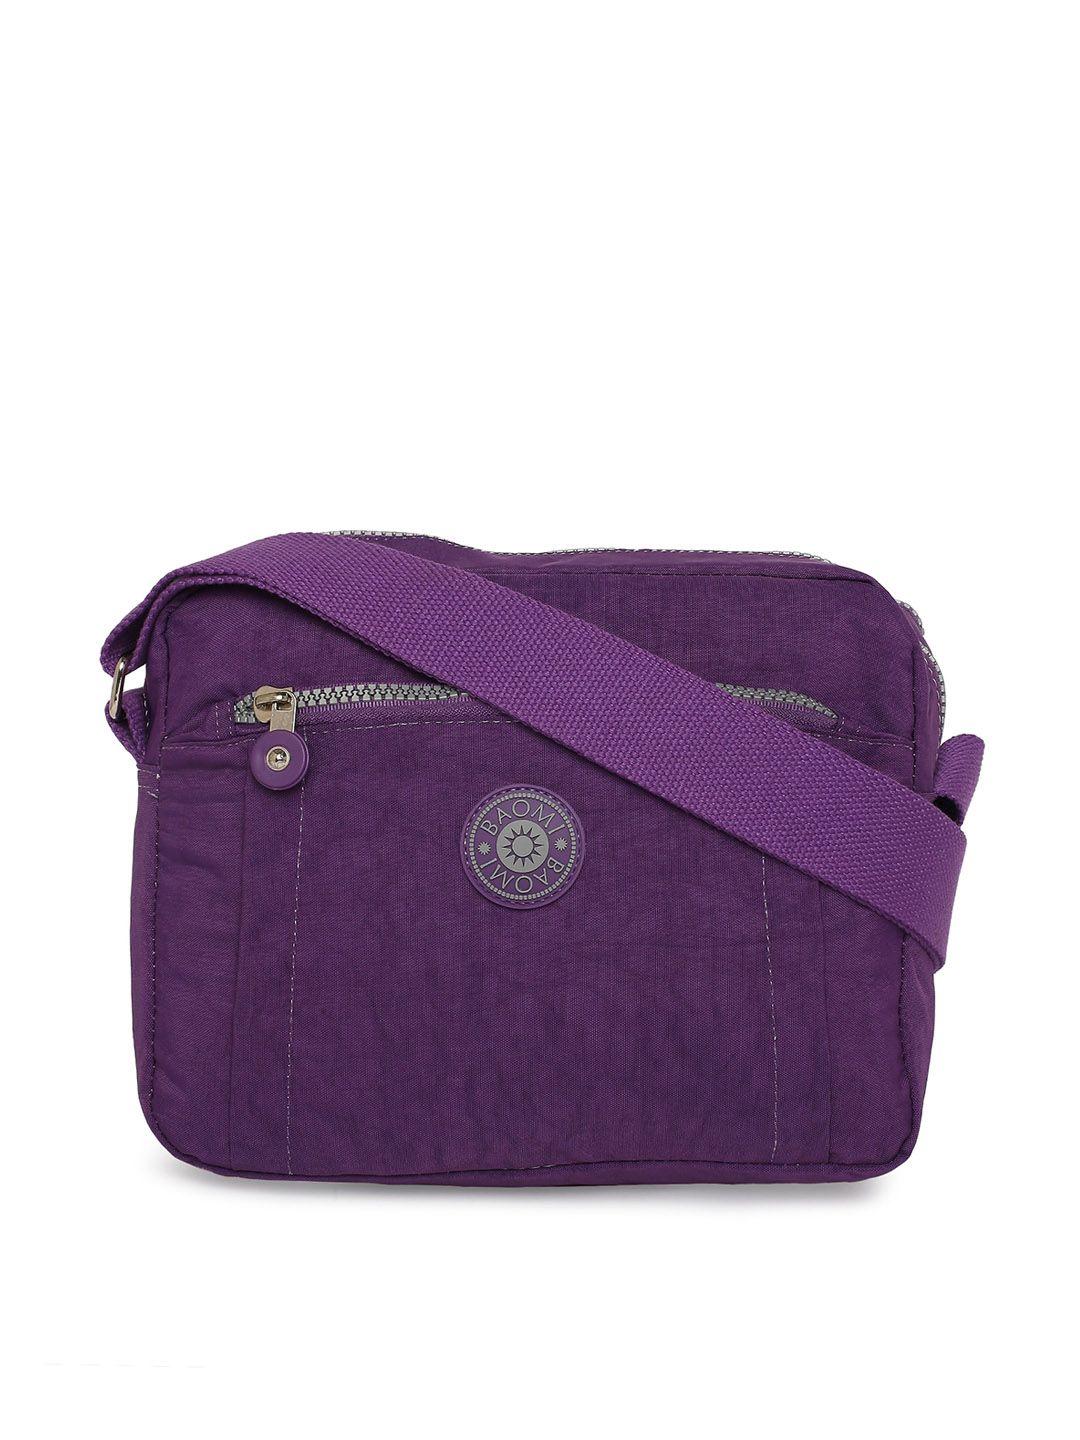 baomi purple shopper sling bag with cut work